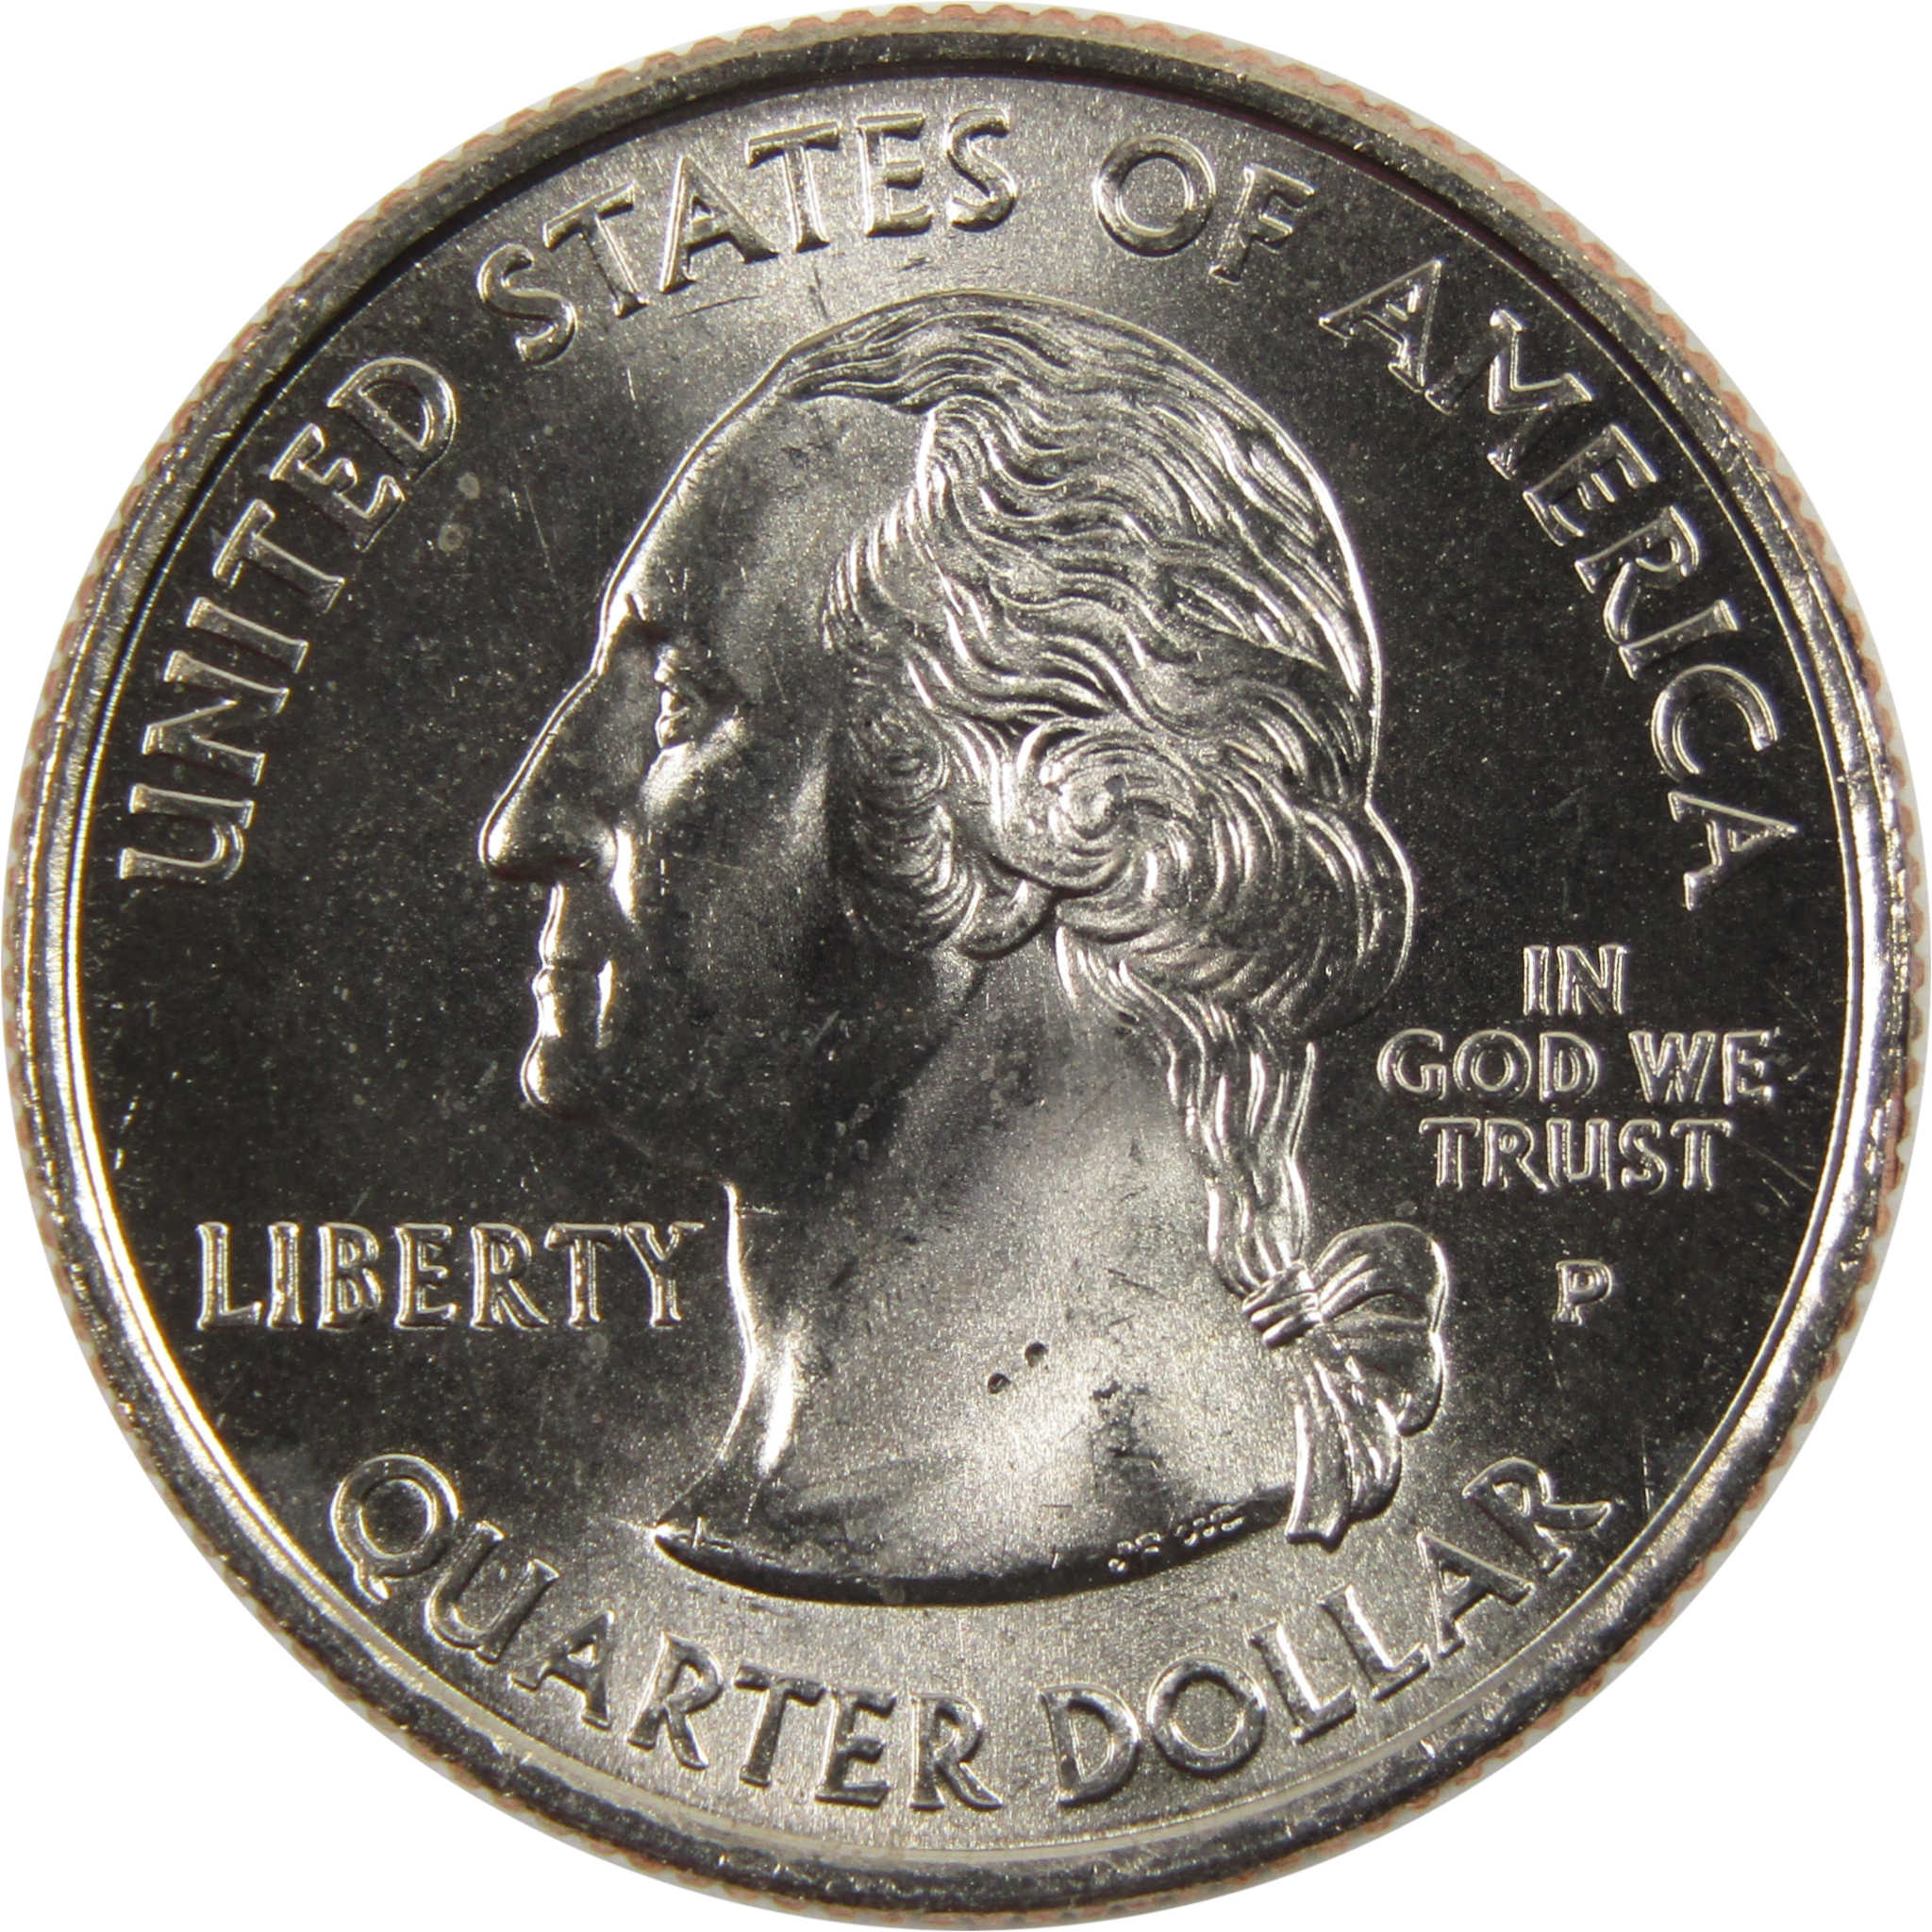 2003 P Maine State Quarter BU Uncirculated Clad 25c Coin